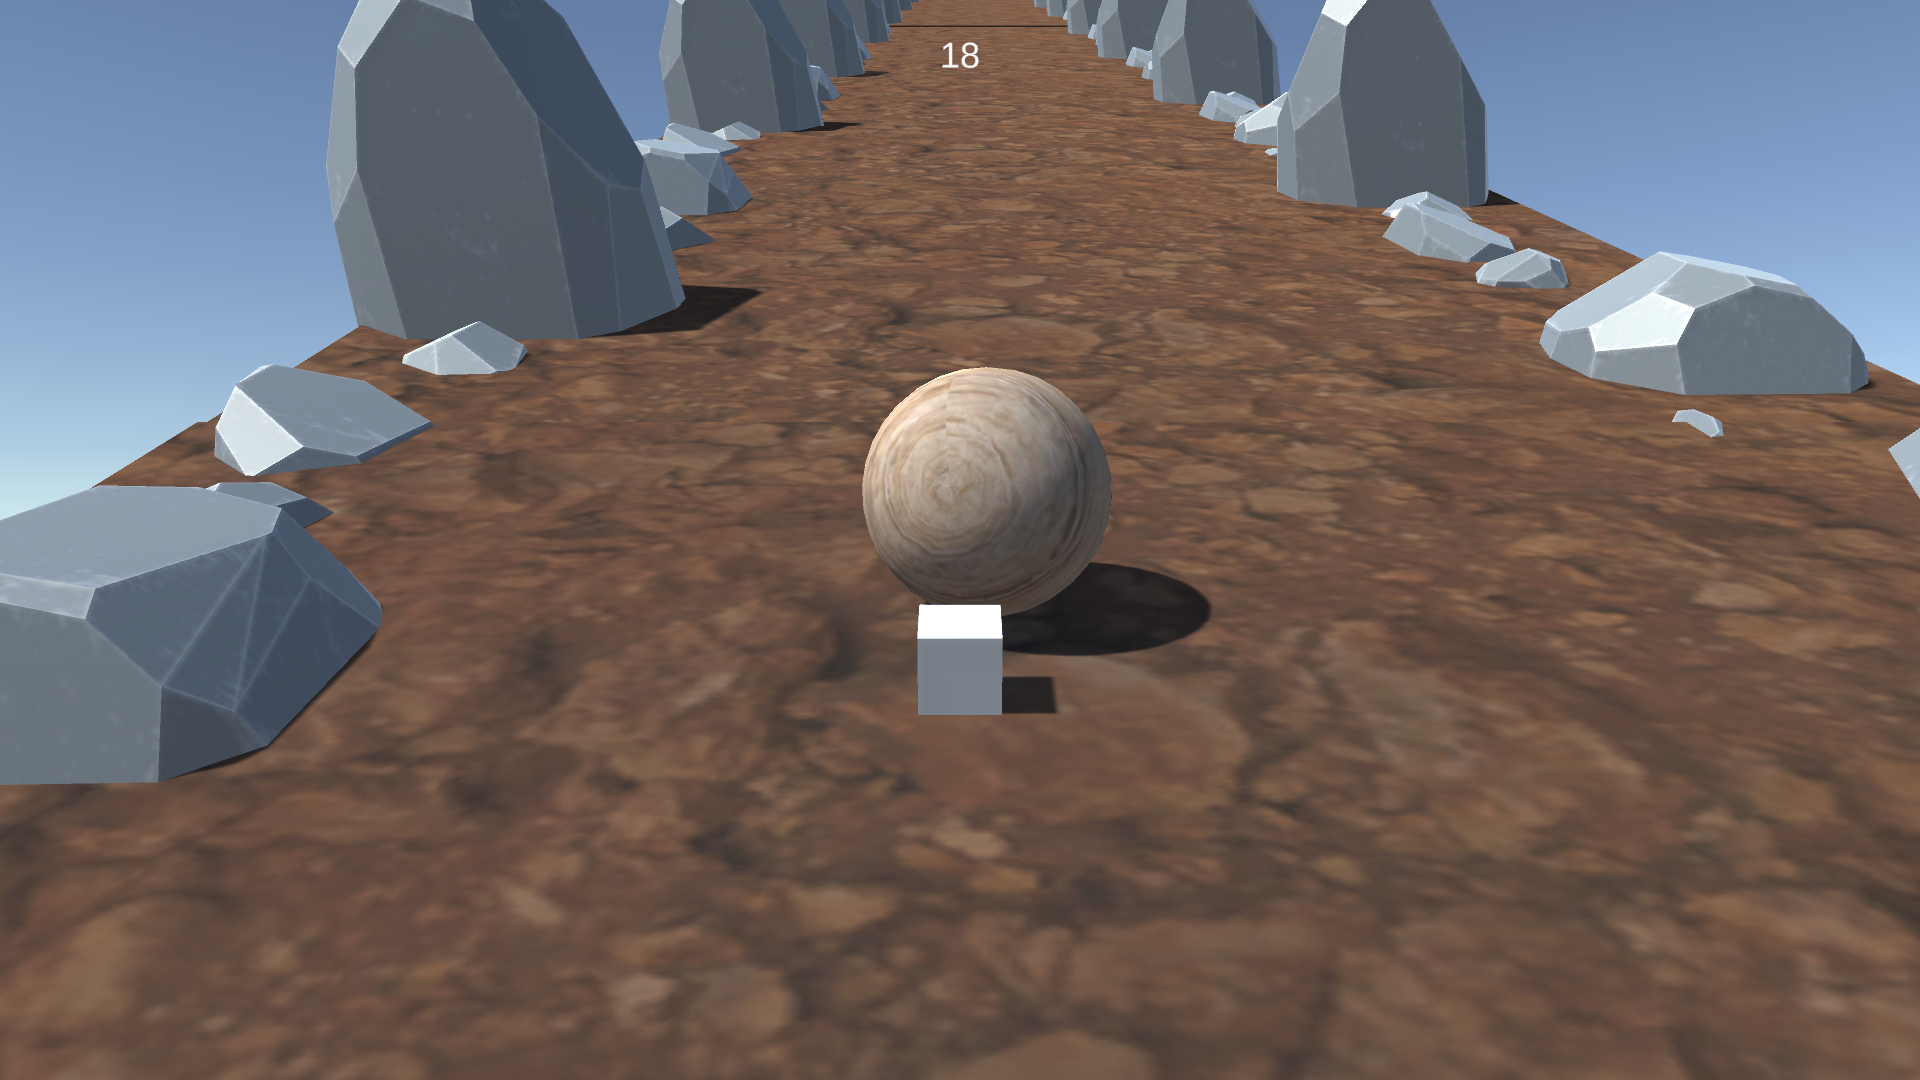 Sisyphus Simulator